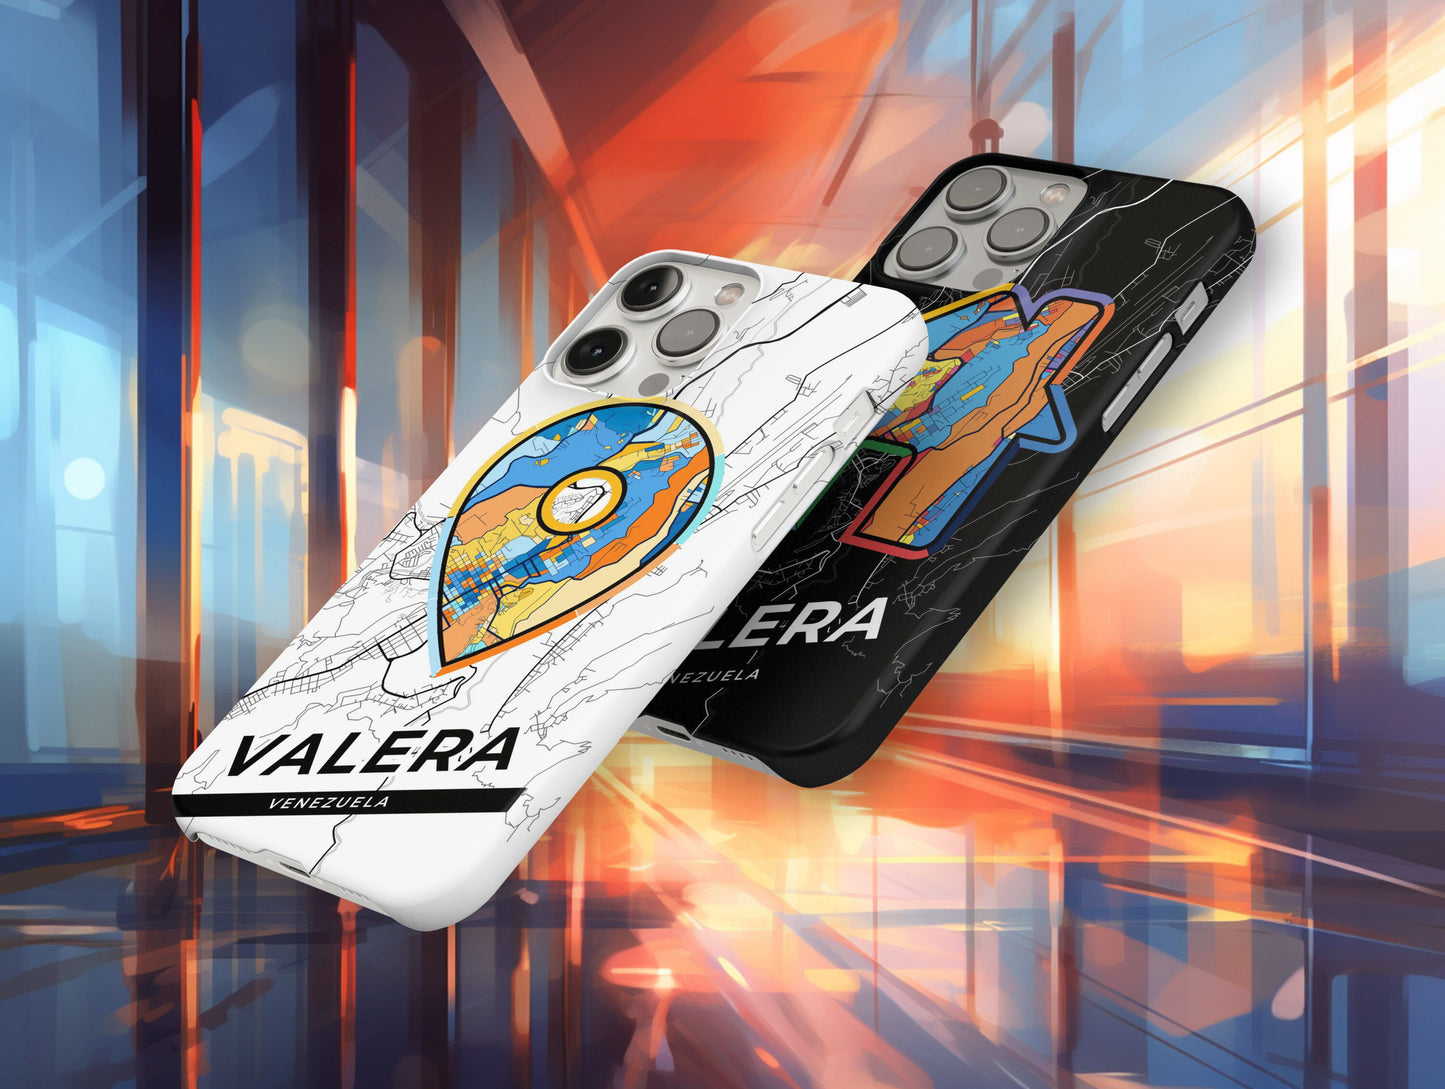 Valera Venezuela slim phone case with colorful icon. Birthday, wedding or housewarming gift. Couple match cases.